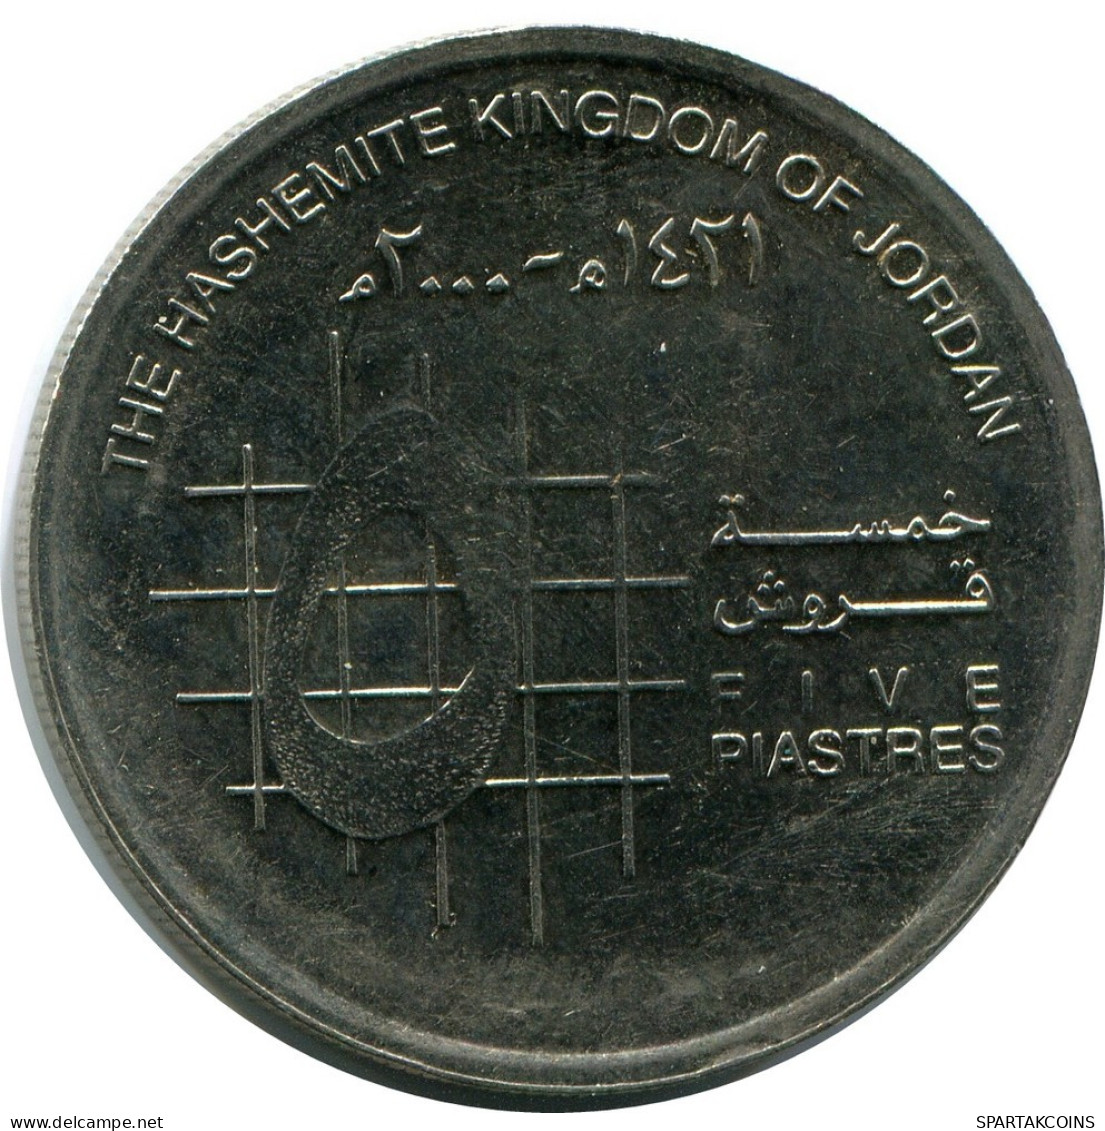 5 PIASTRES 2000 JORDAN Coin #AP399.U.A - Jordan